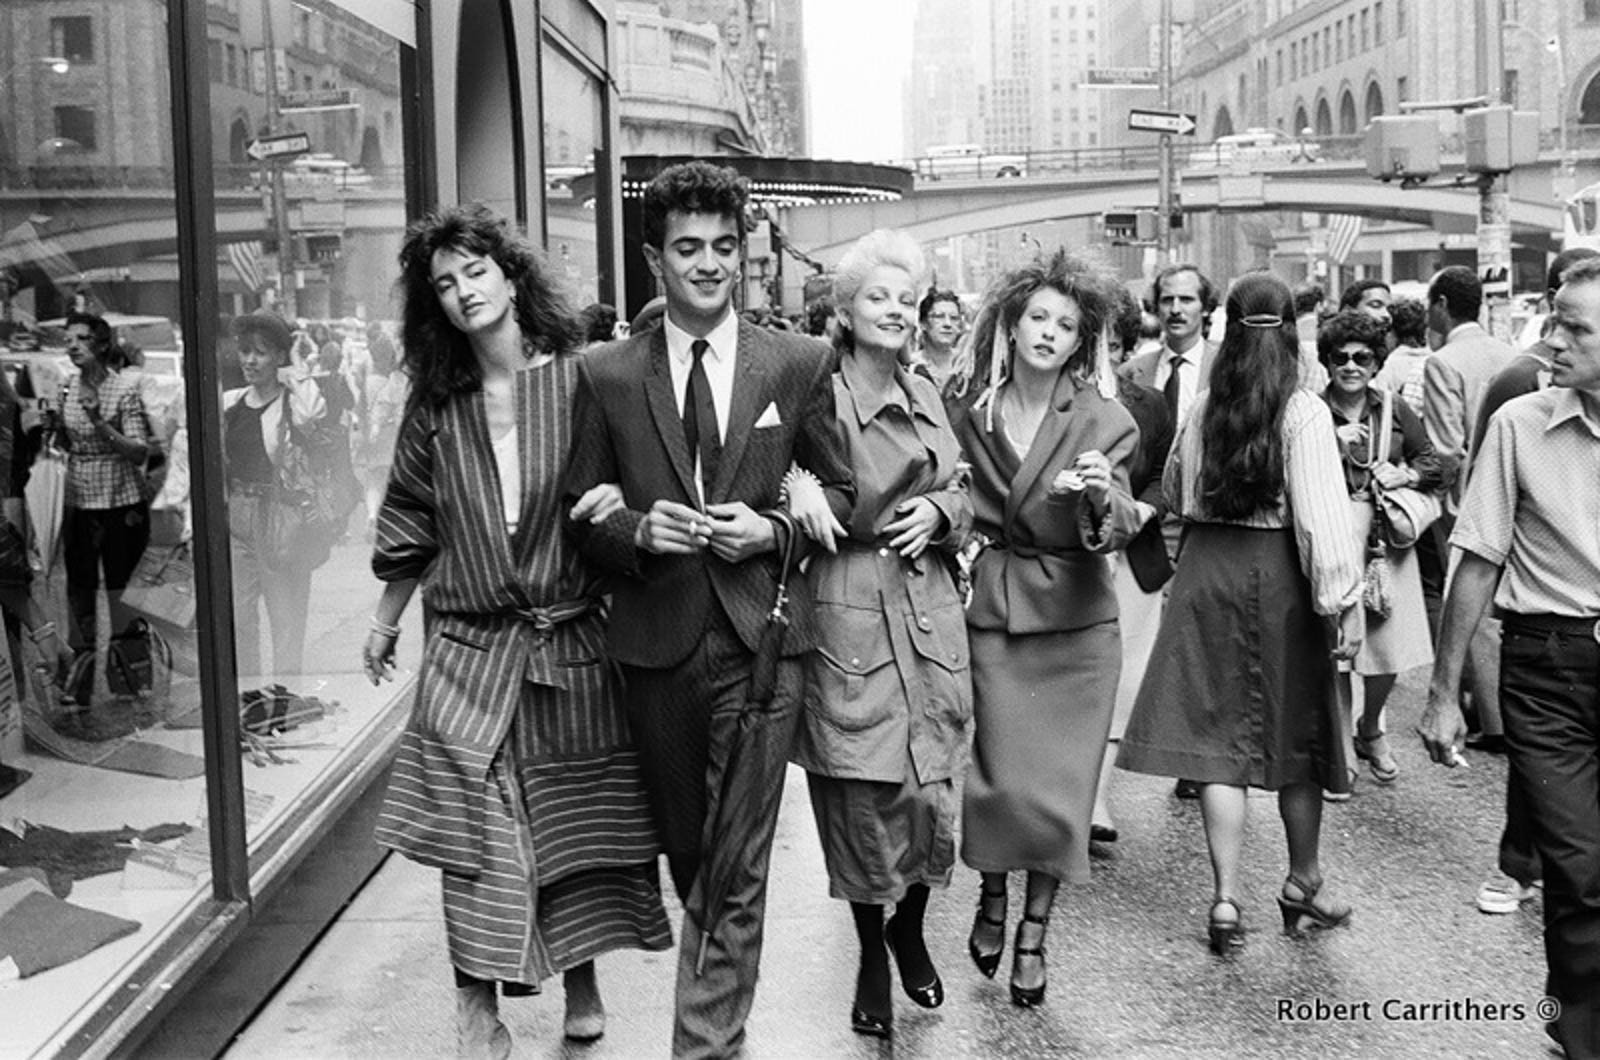 Demob Fashion 42nd Street New York City 1982